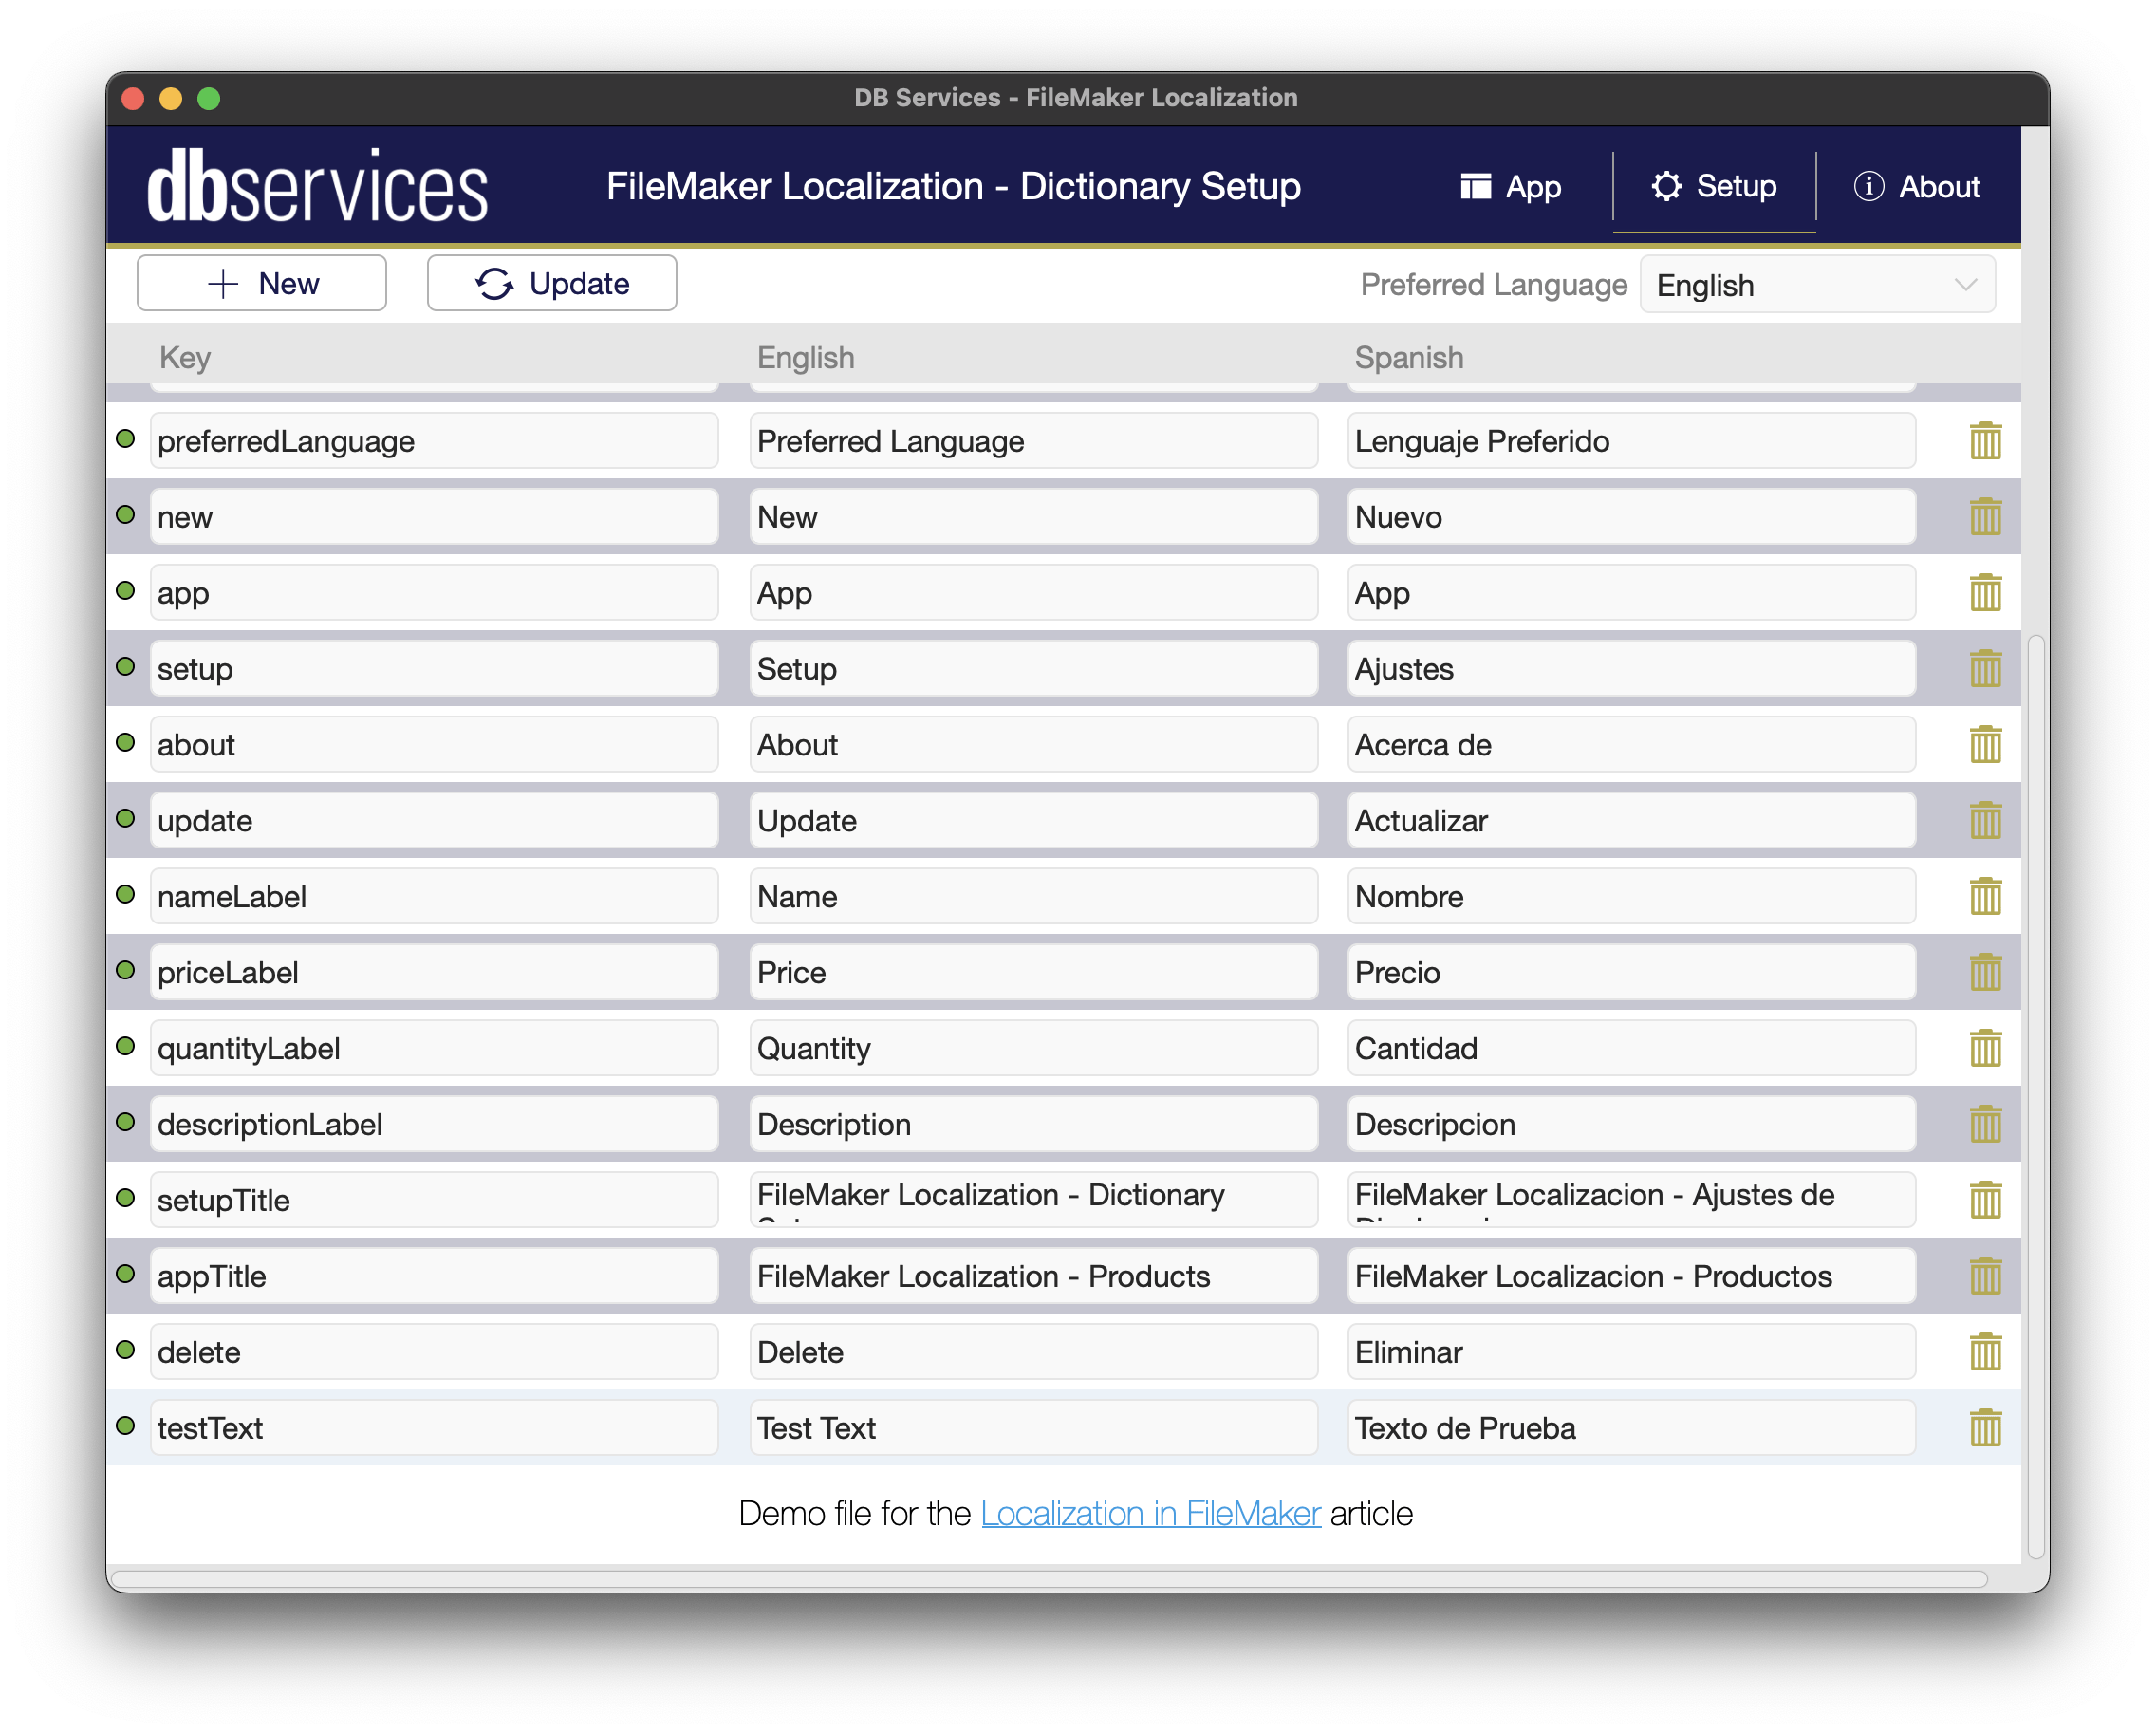 filemaker localization english dictionary setup